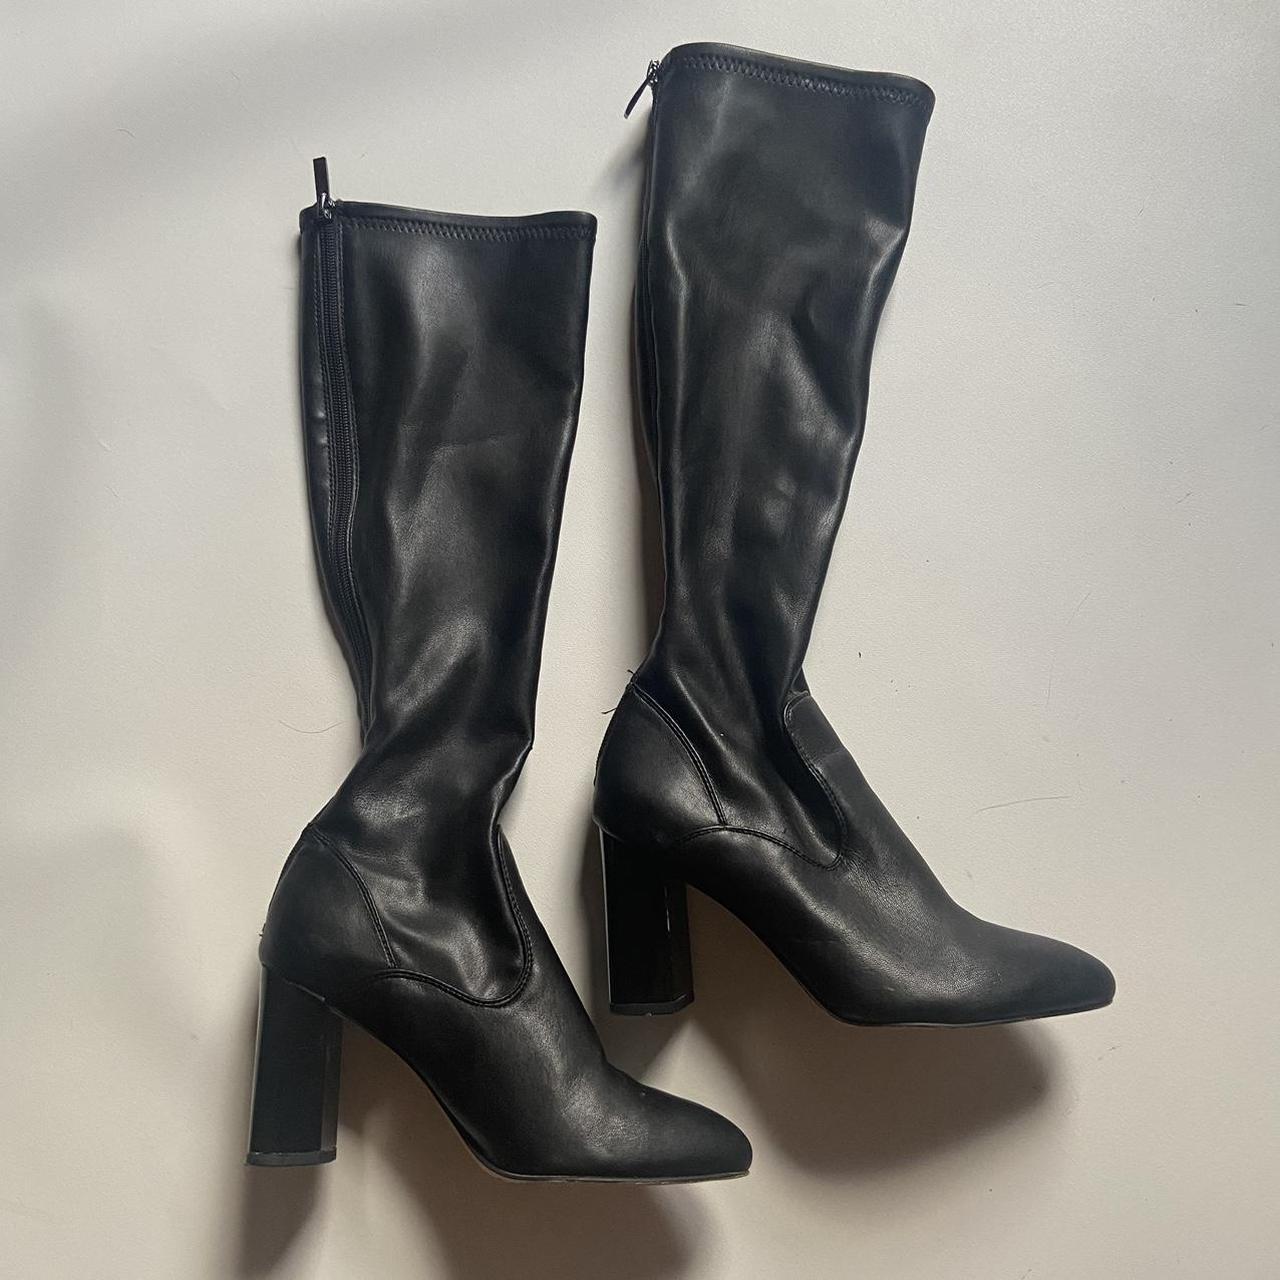 Stunning ‘Franco Sarto’ knee high leather boots... - Depop